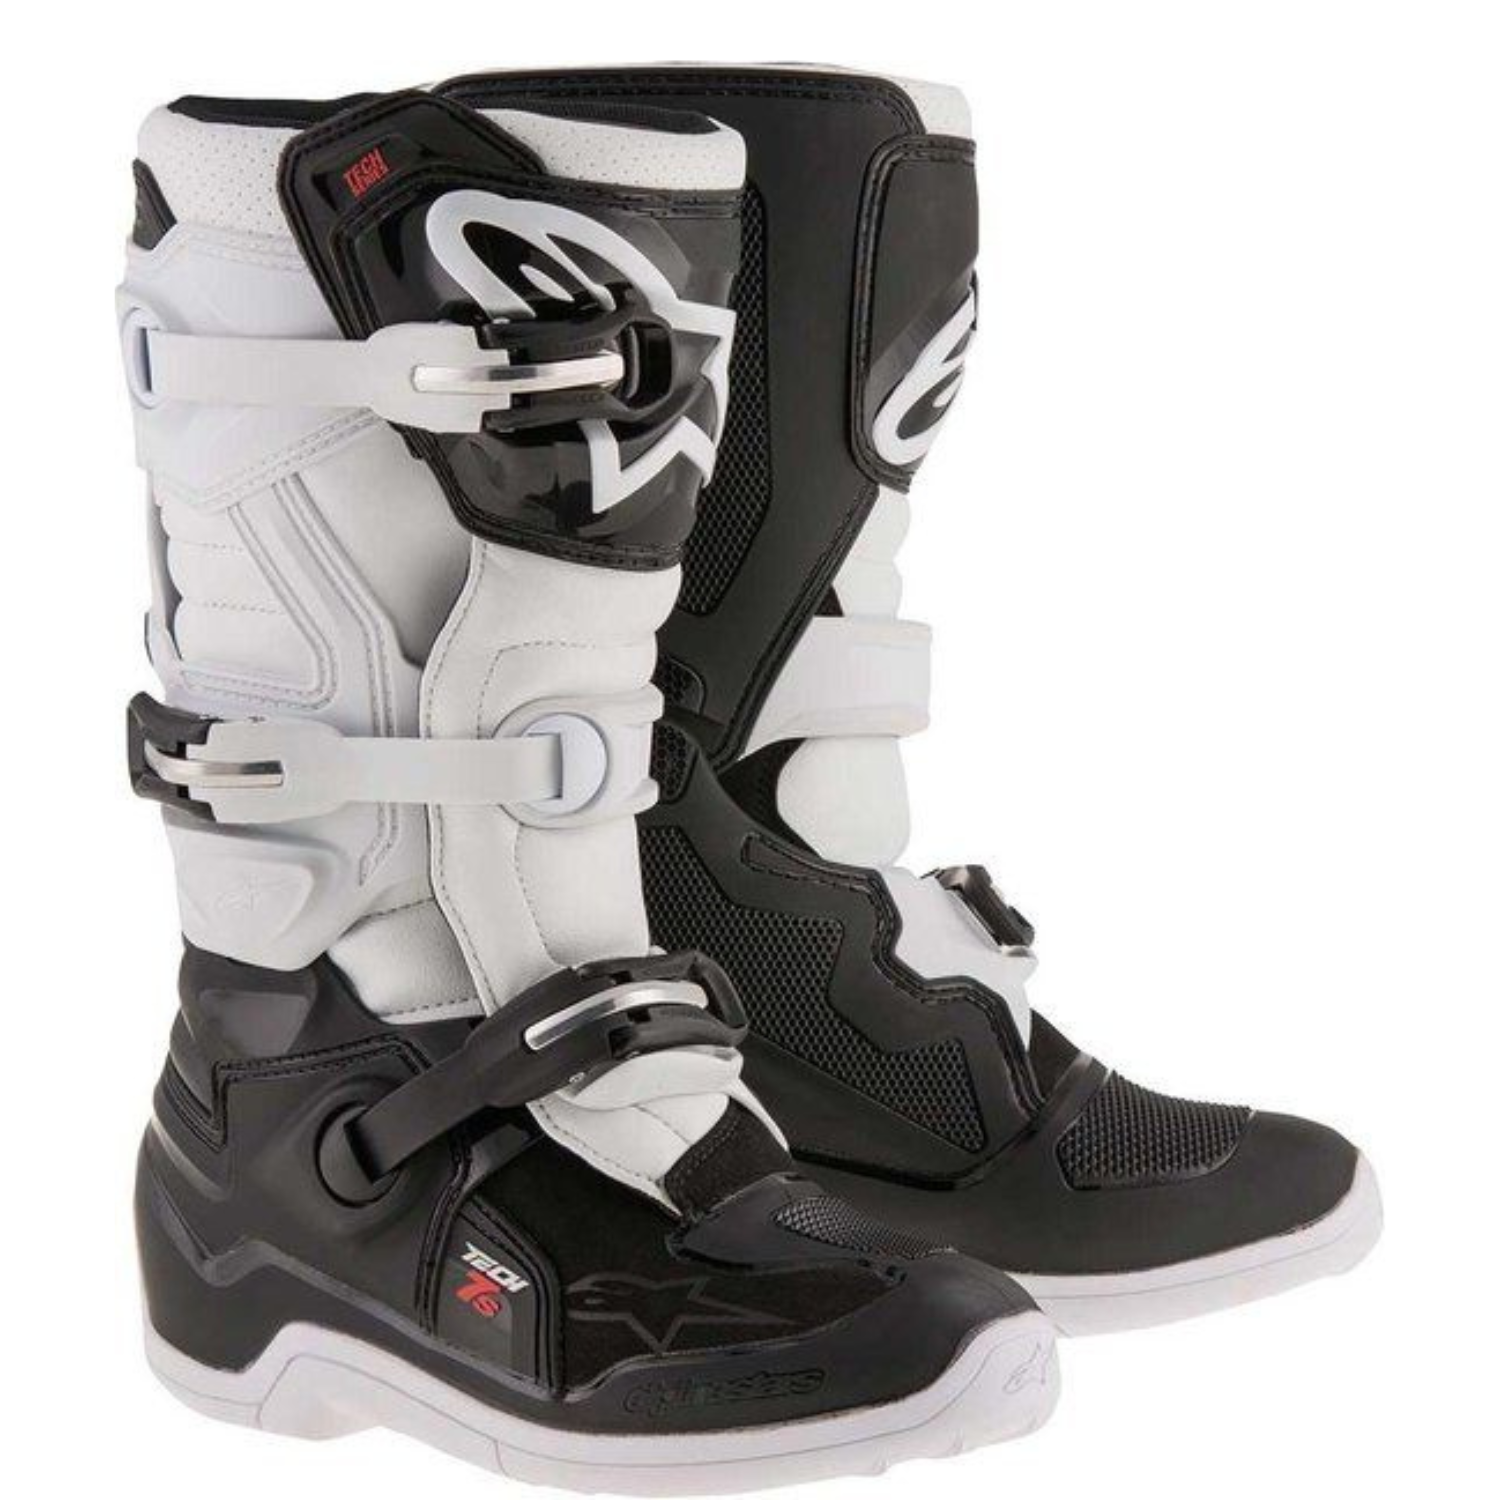 Image of Alpinestars Tech 7 S Black White Boots Size US 4 ID 8051194974891